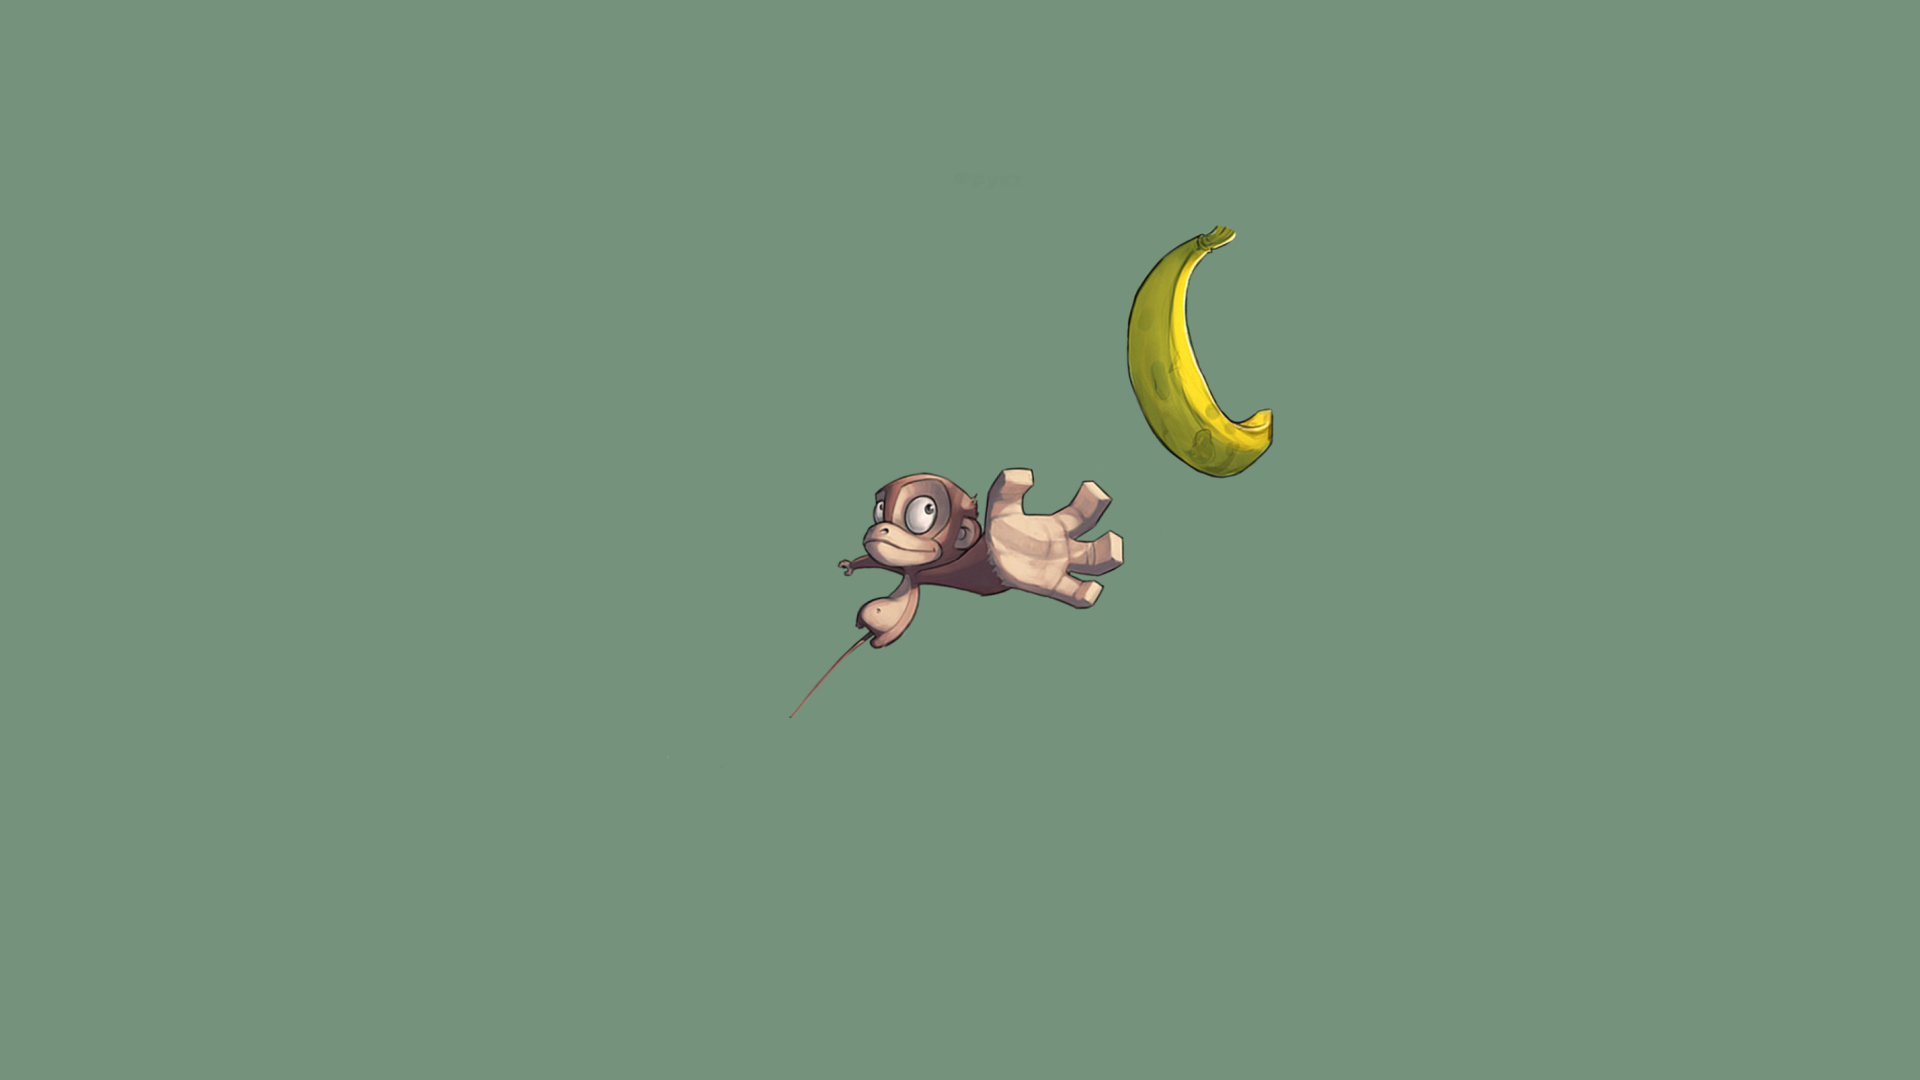 Monkey Wants Banana wallpaper 1920x1080